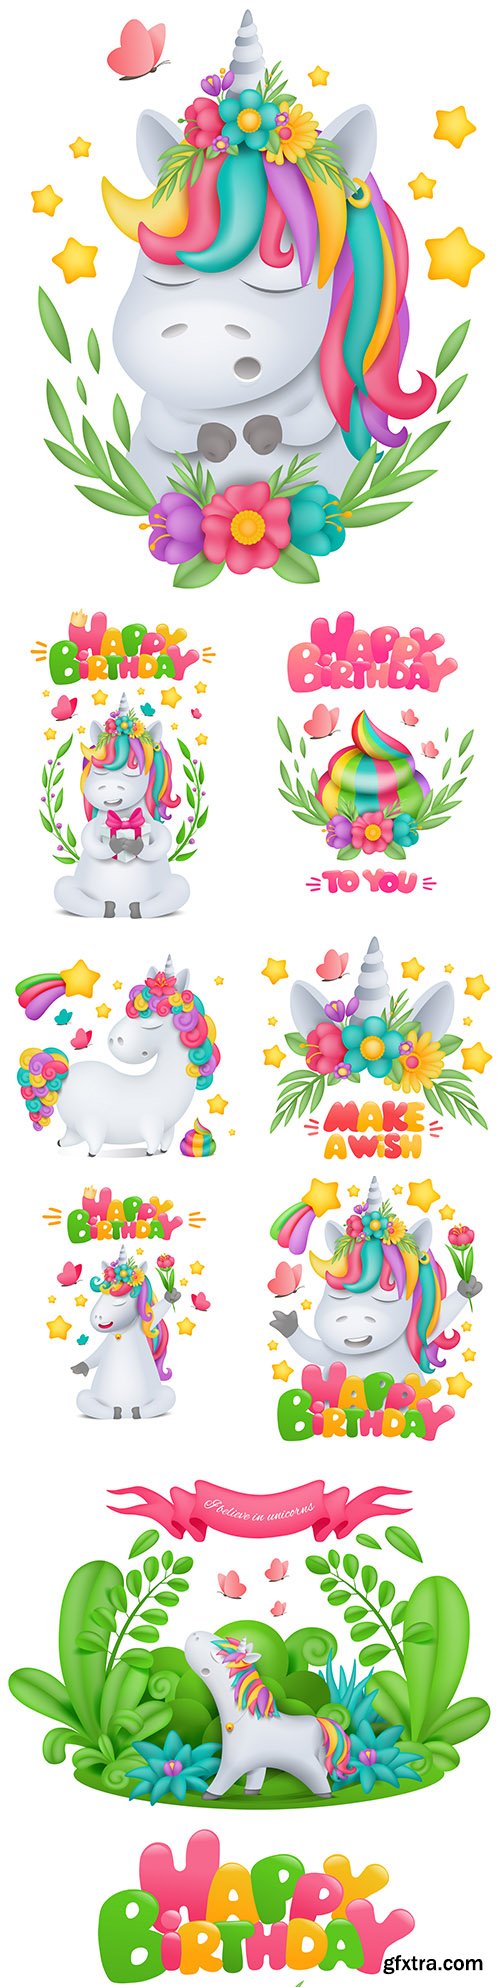 Unicorn cartoon birthday greeting card design